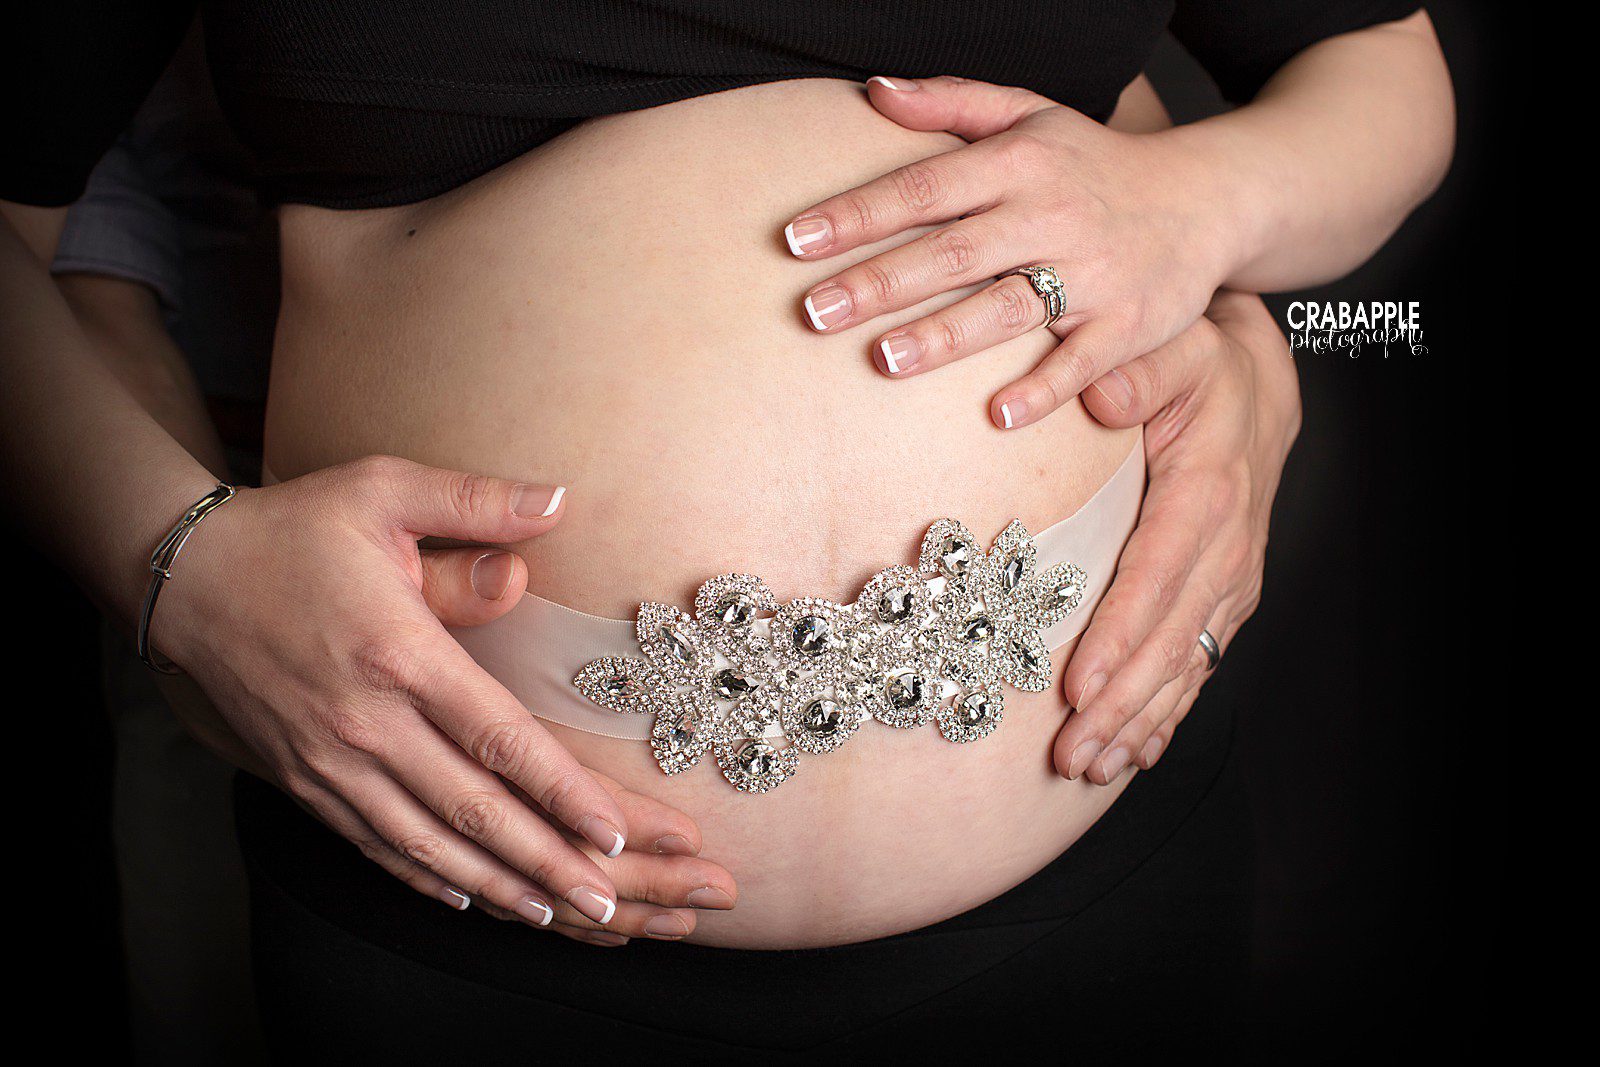 arlington ma pregnancy photos using sentimental props